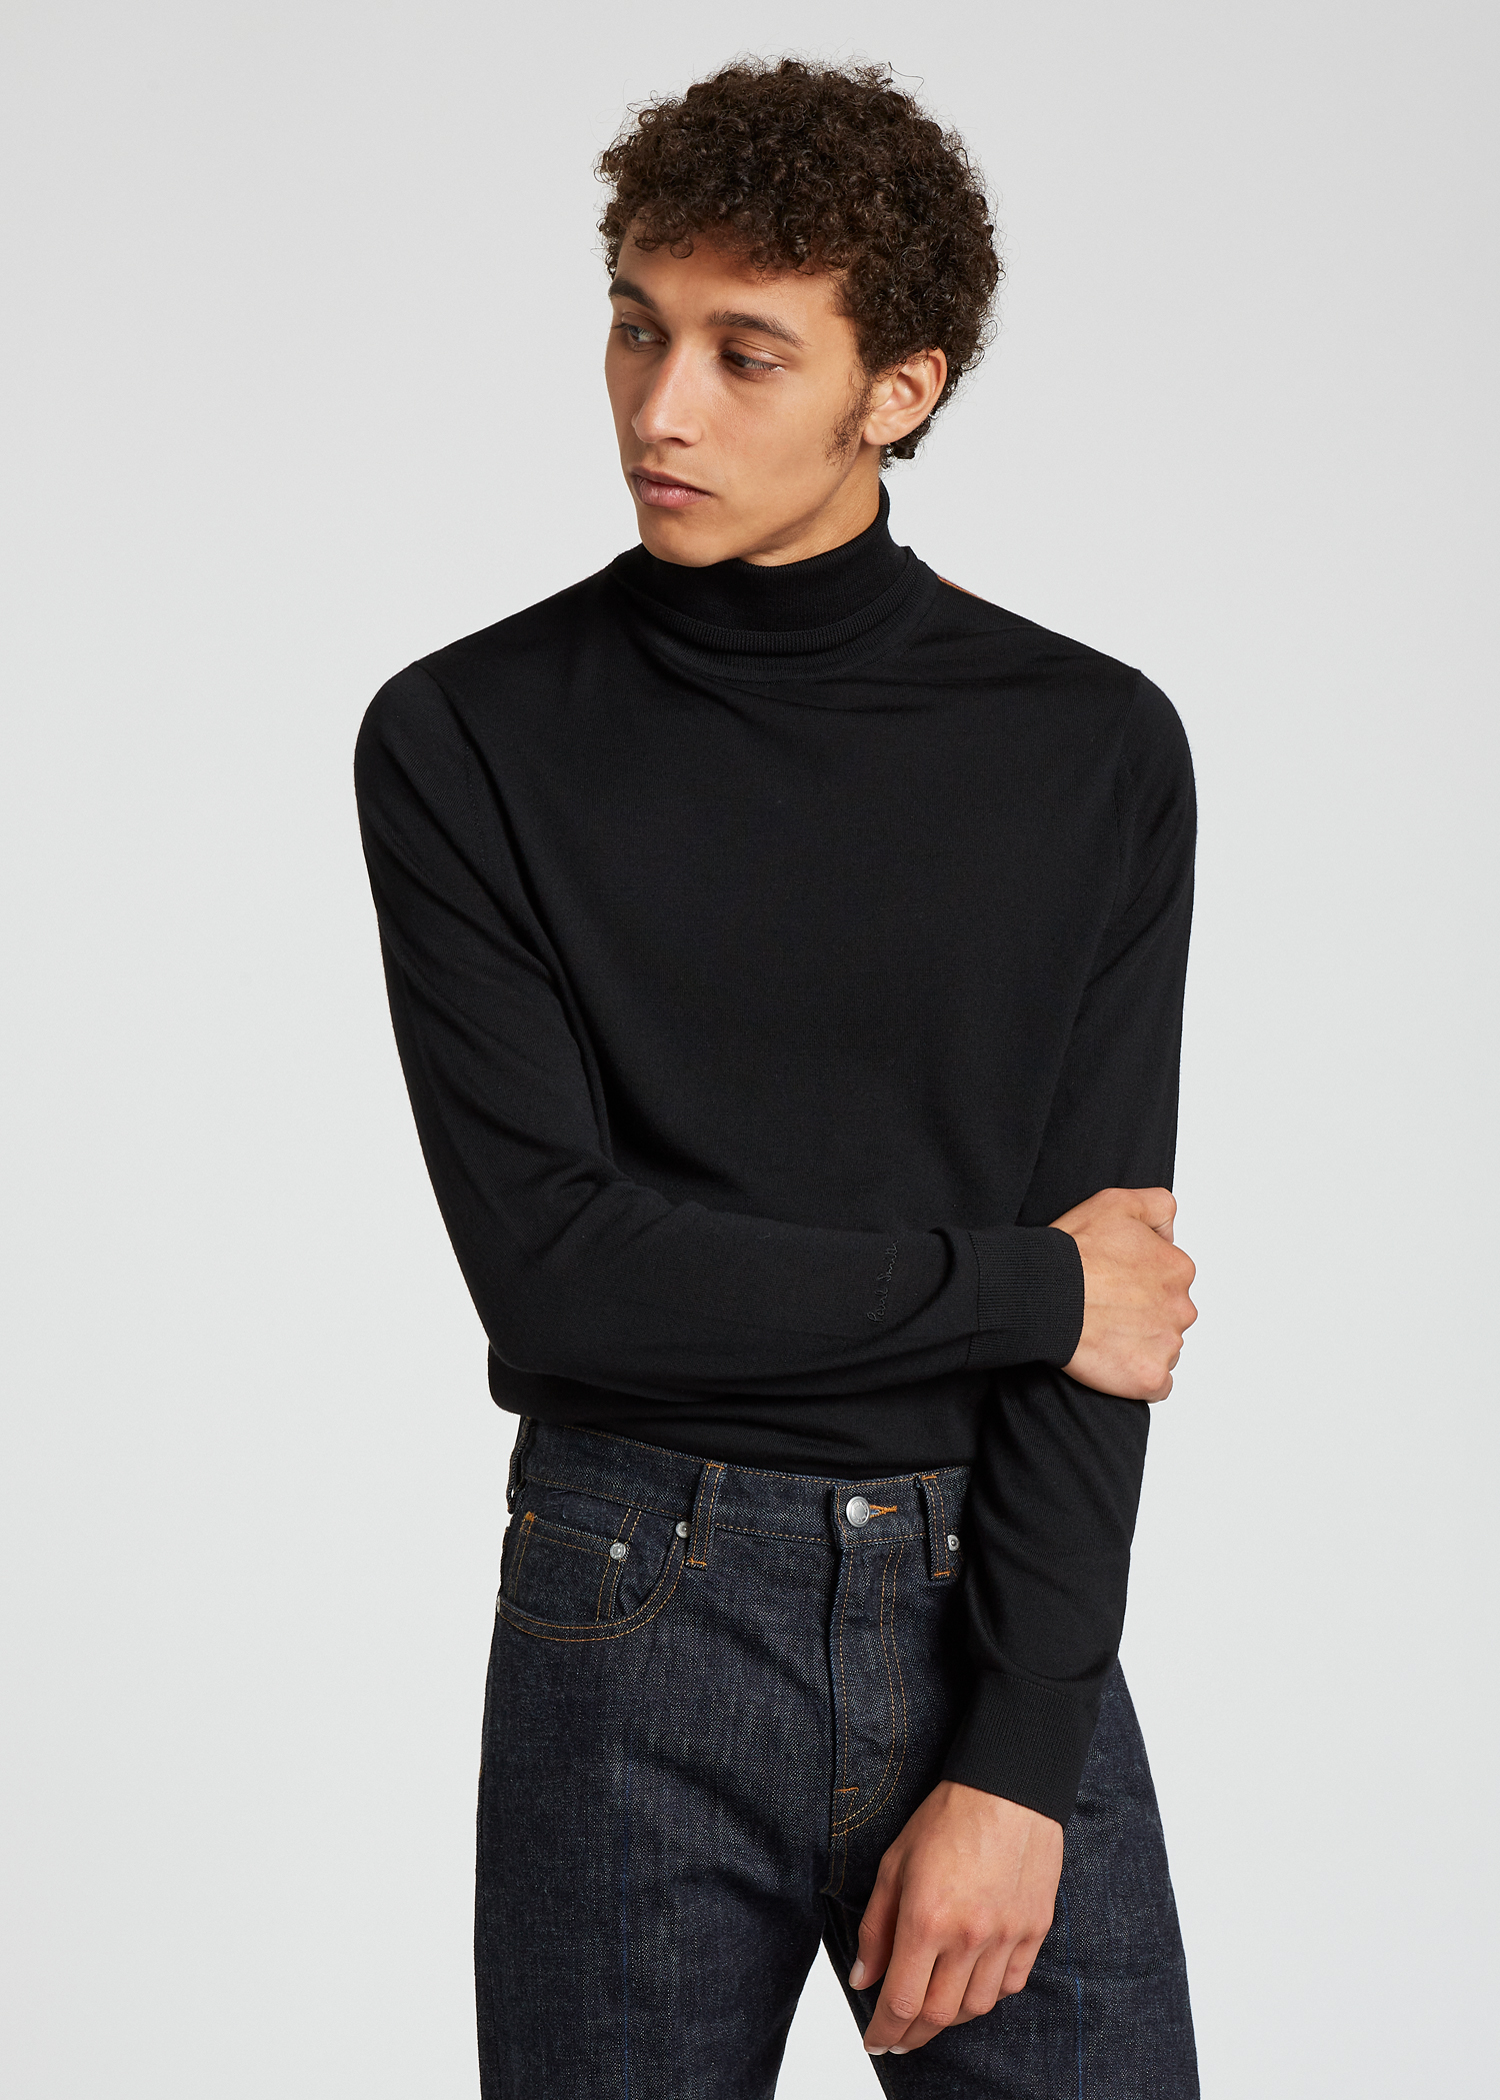 Model front view - Men's Black Merino Roll-Neck Sweater With 'Signature Stripe' Paul Smith